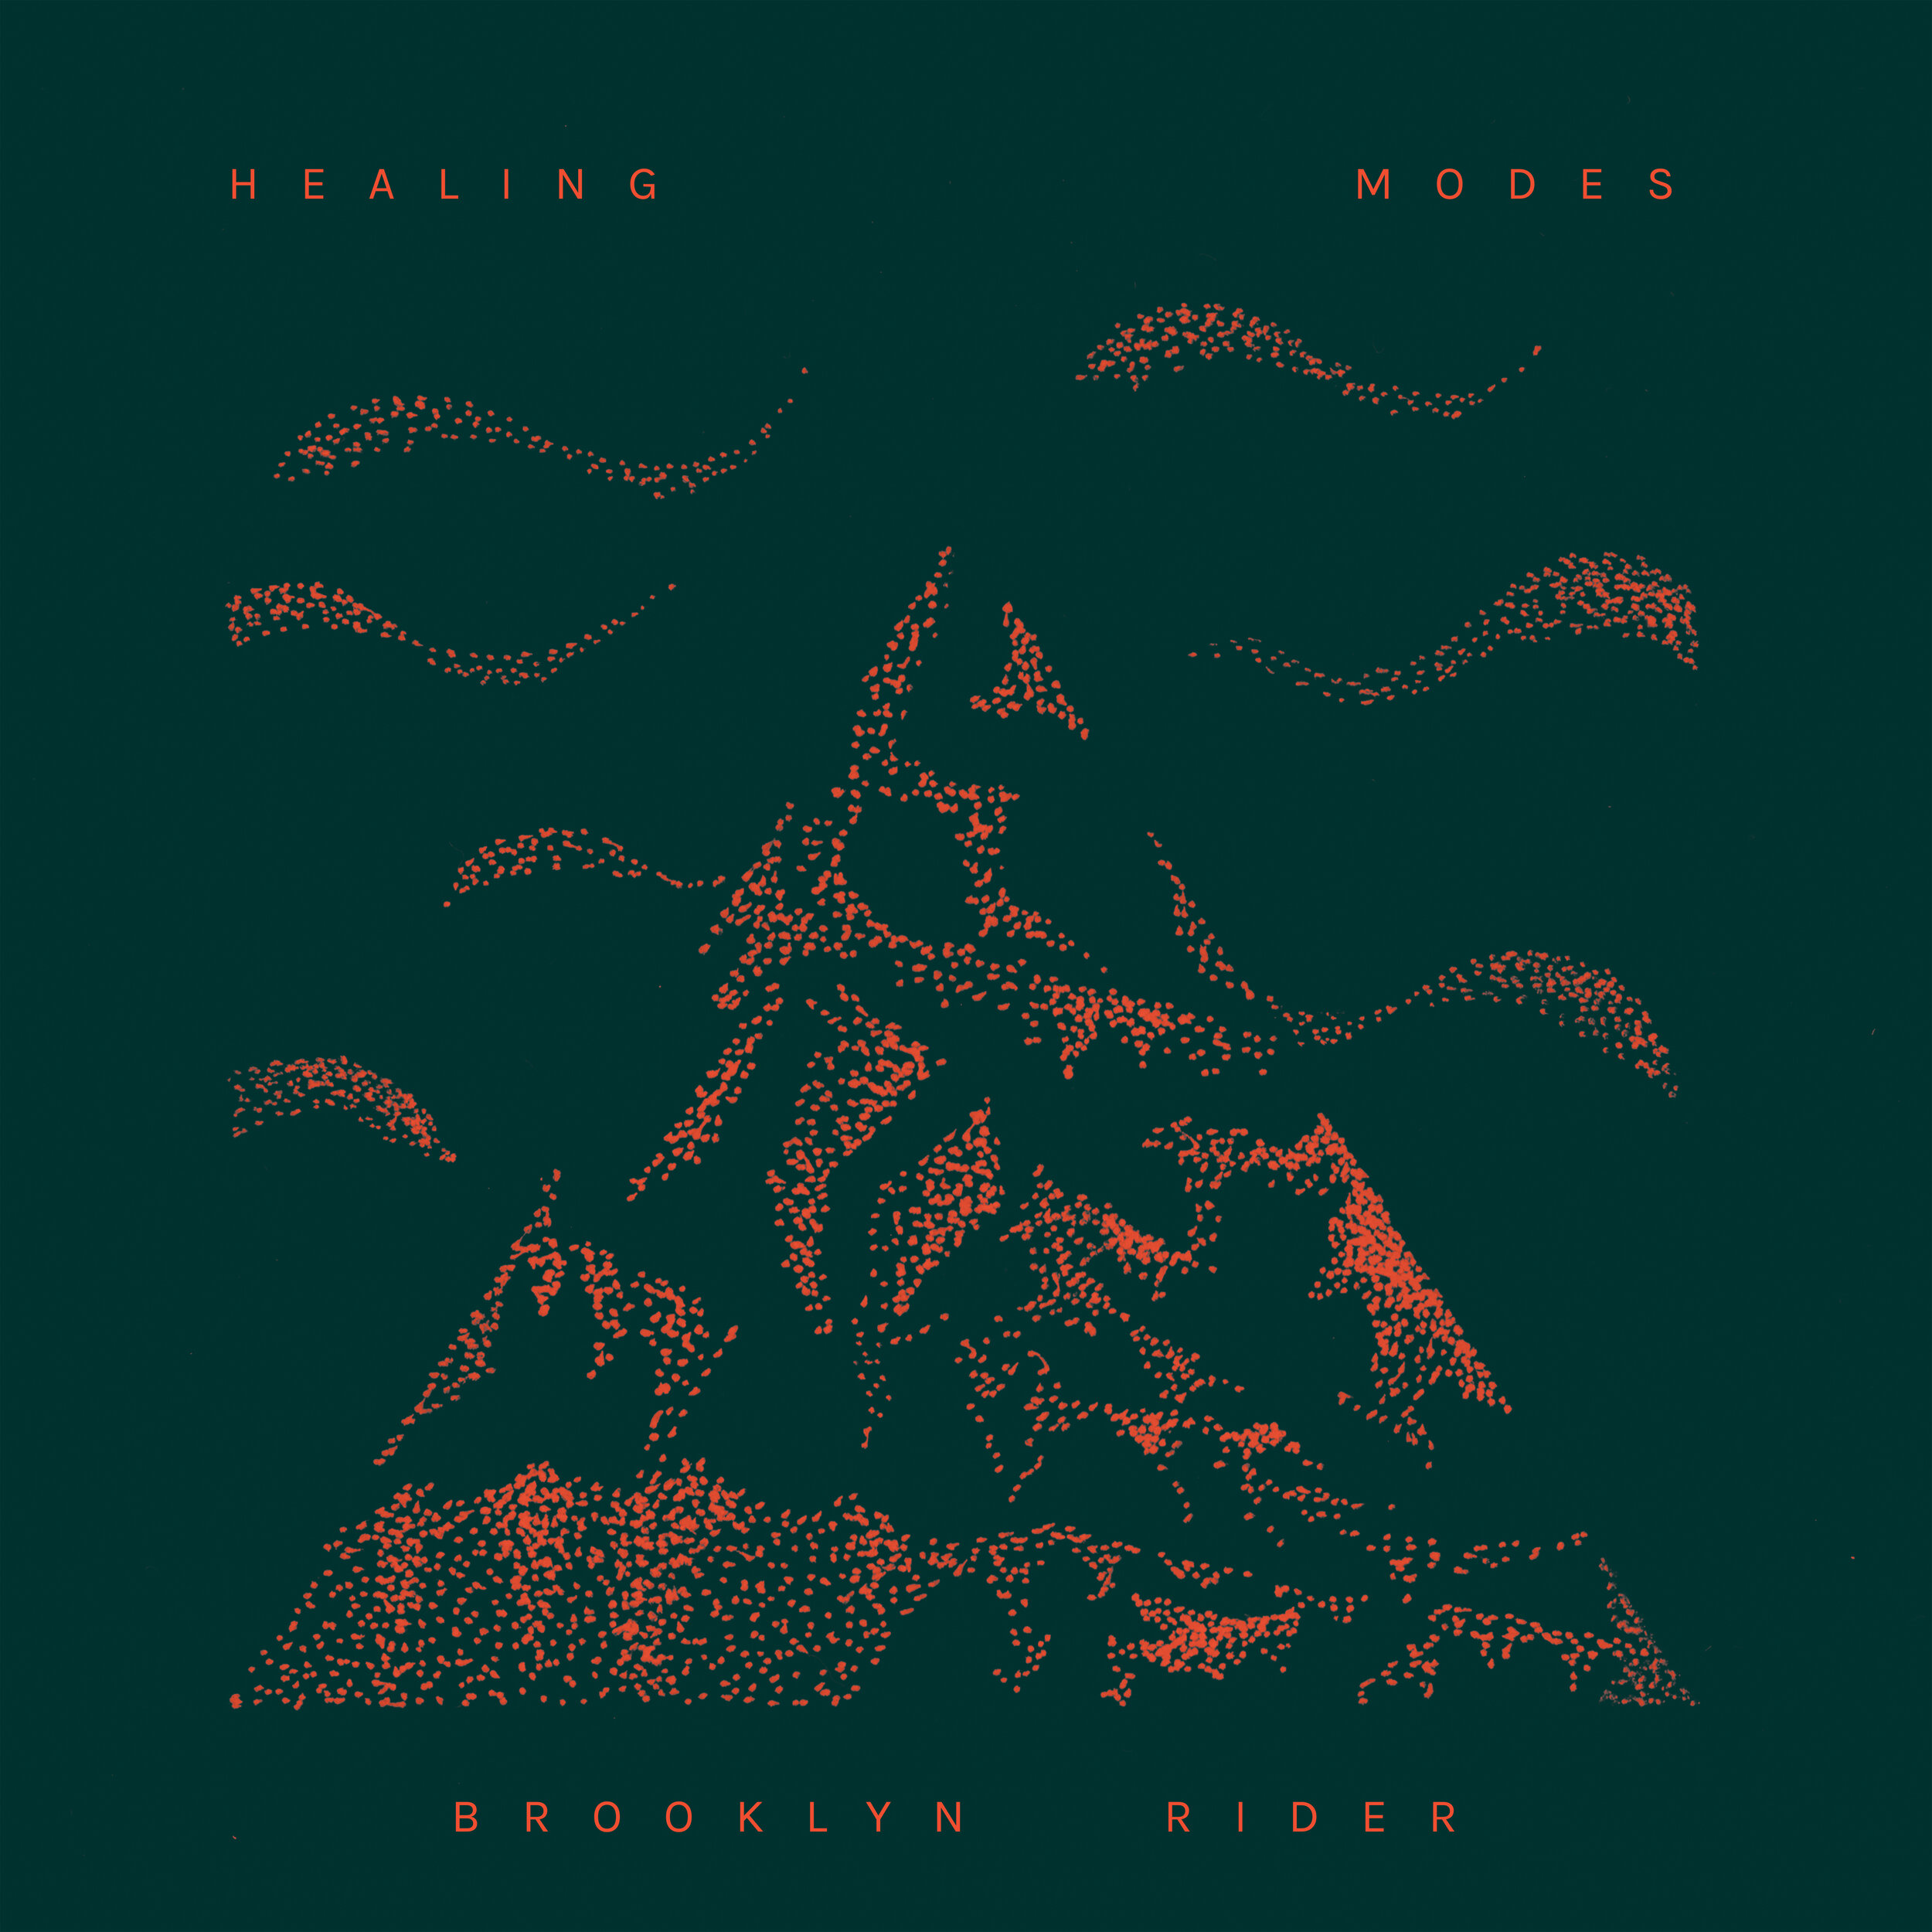 Brooklyn Rider - "Healing Modes" (2020) ICR014